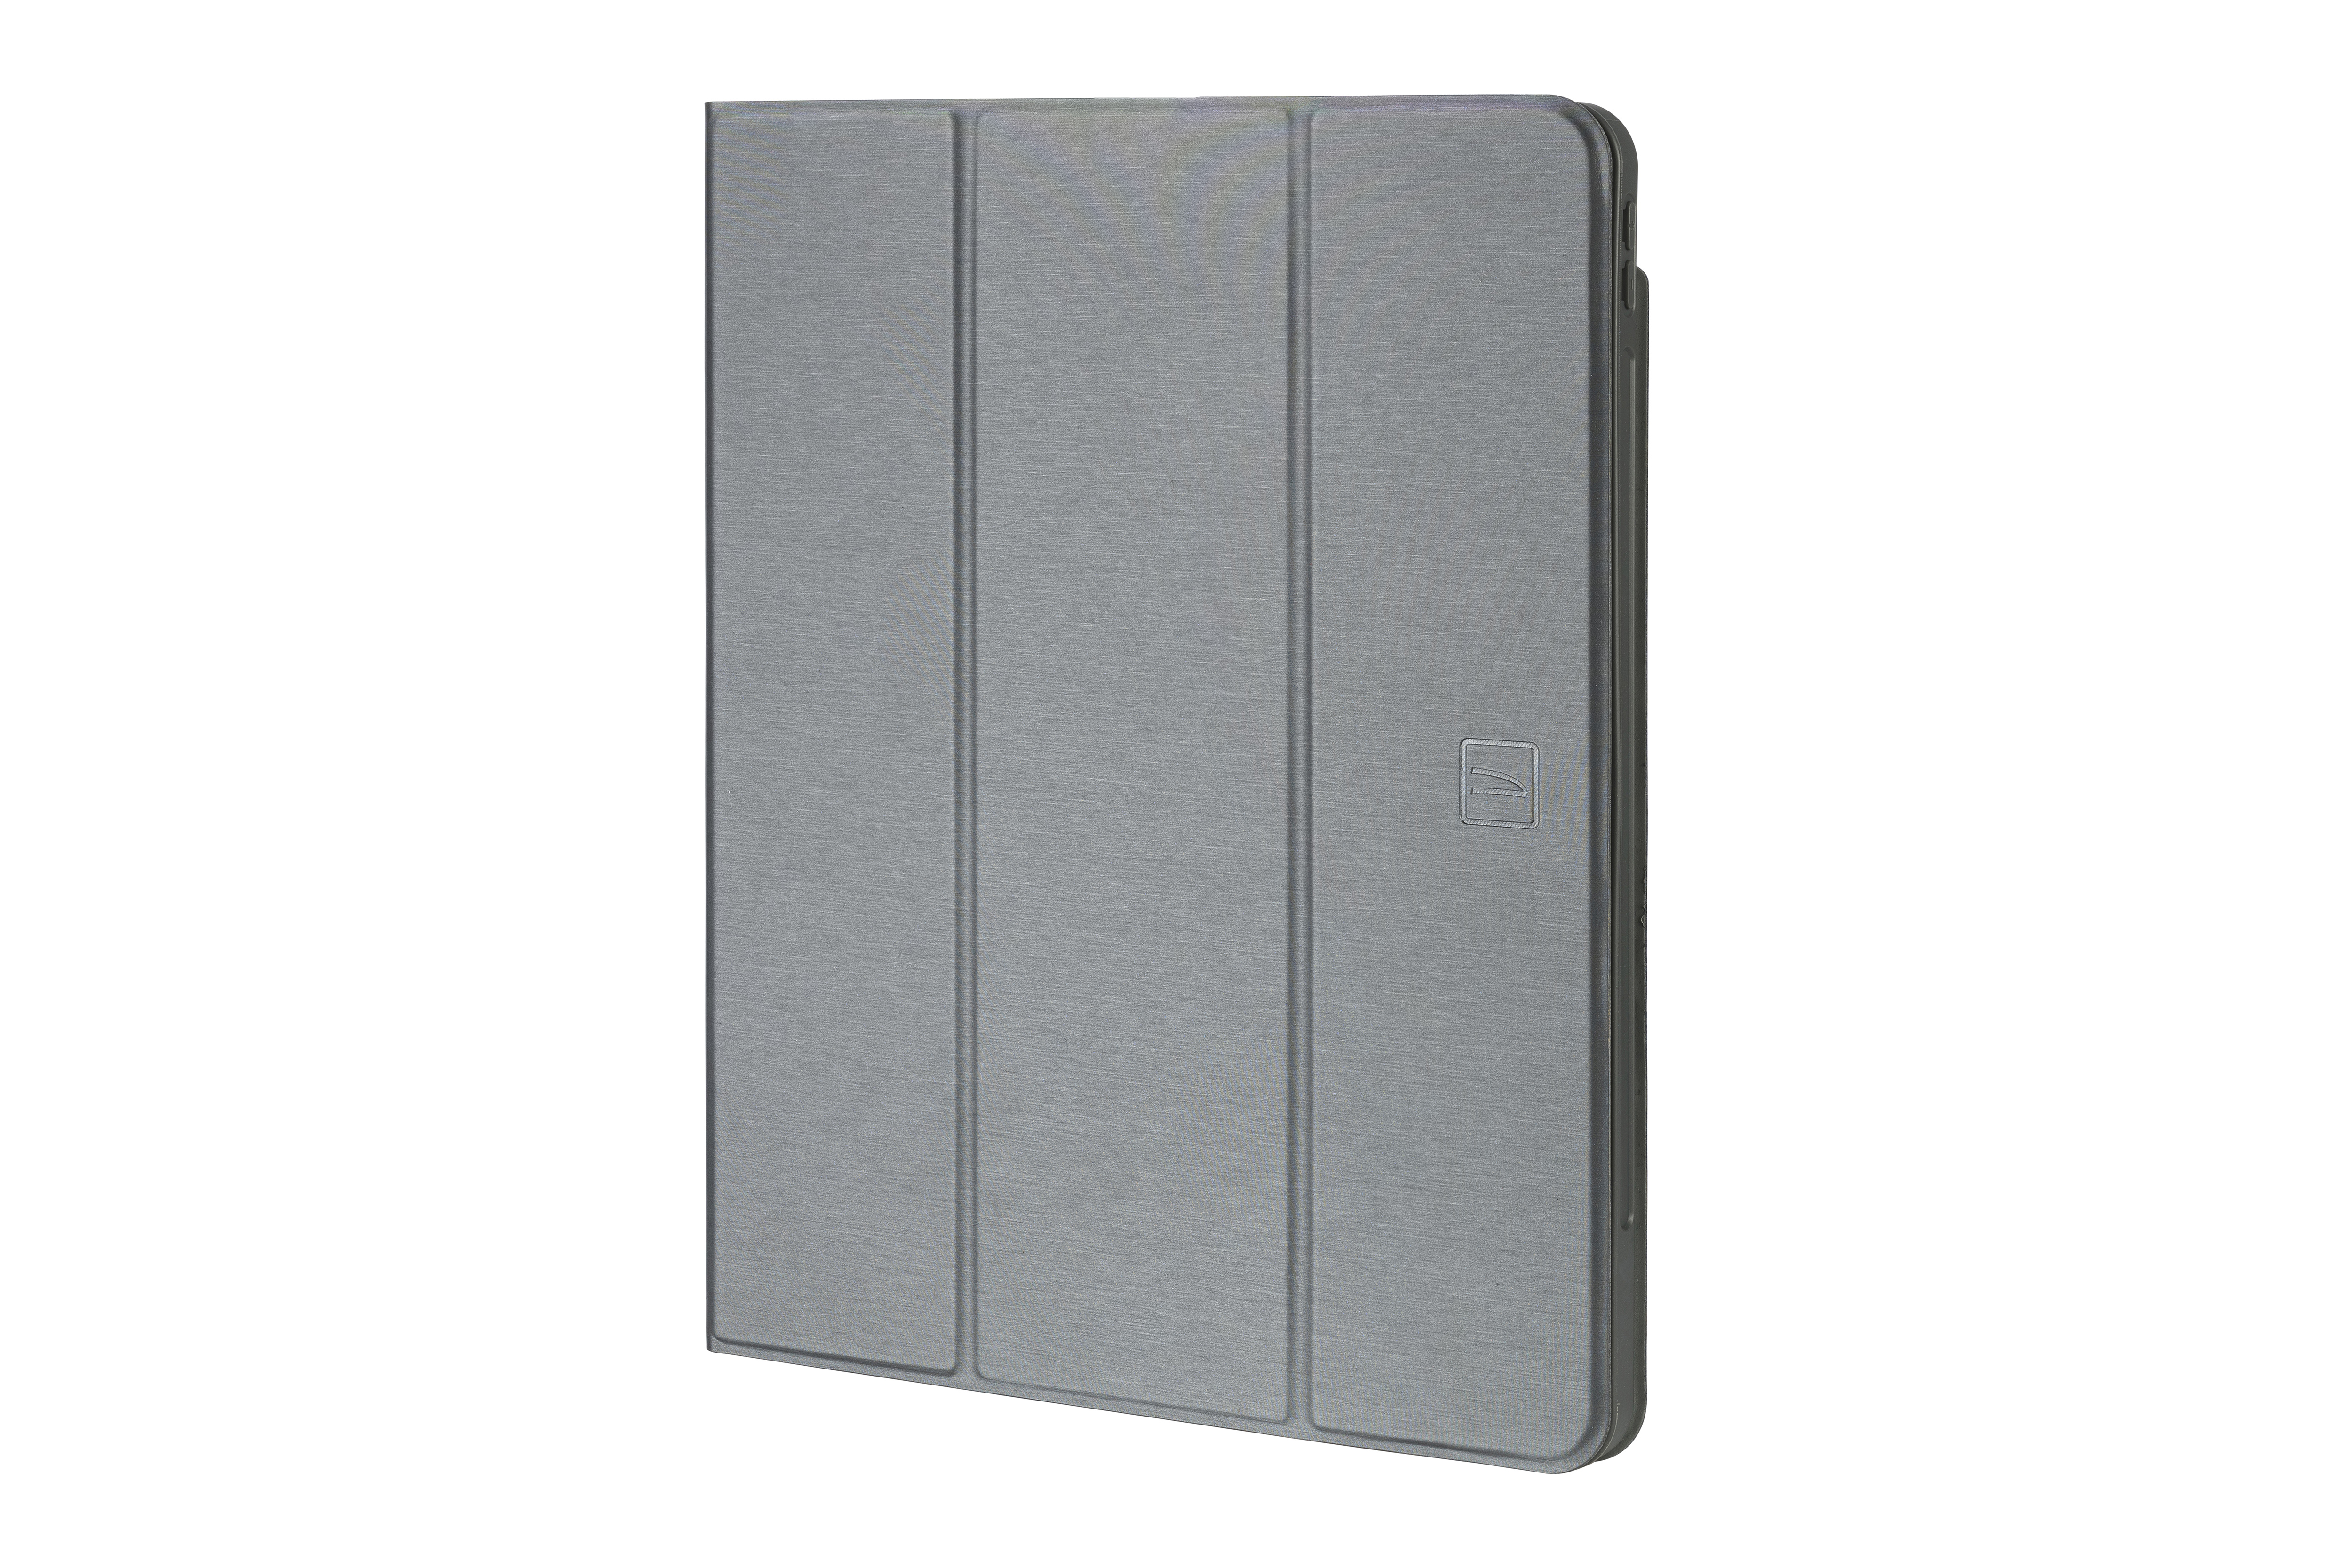 Tucano Link Folio Case for iPad Pro 11-inch and 12.9-inch